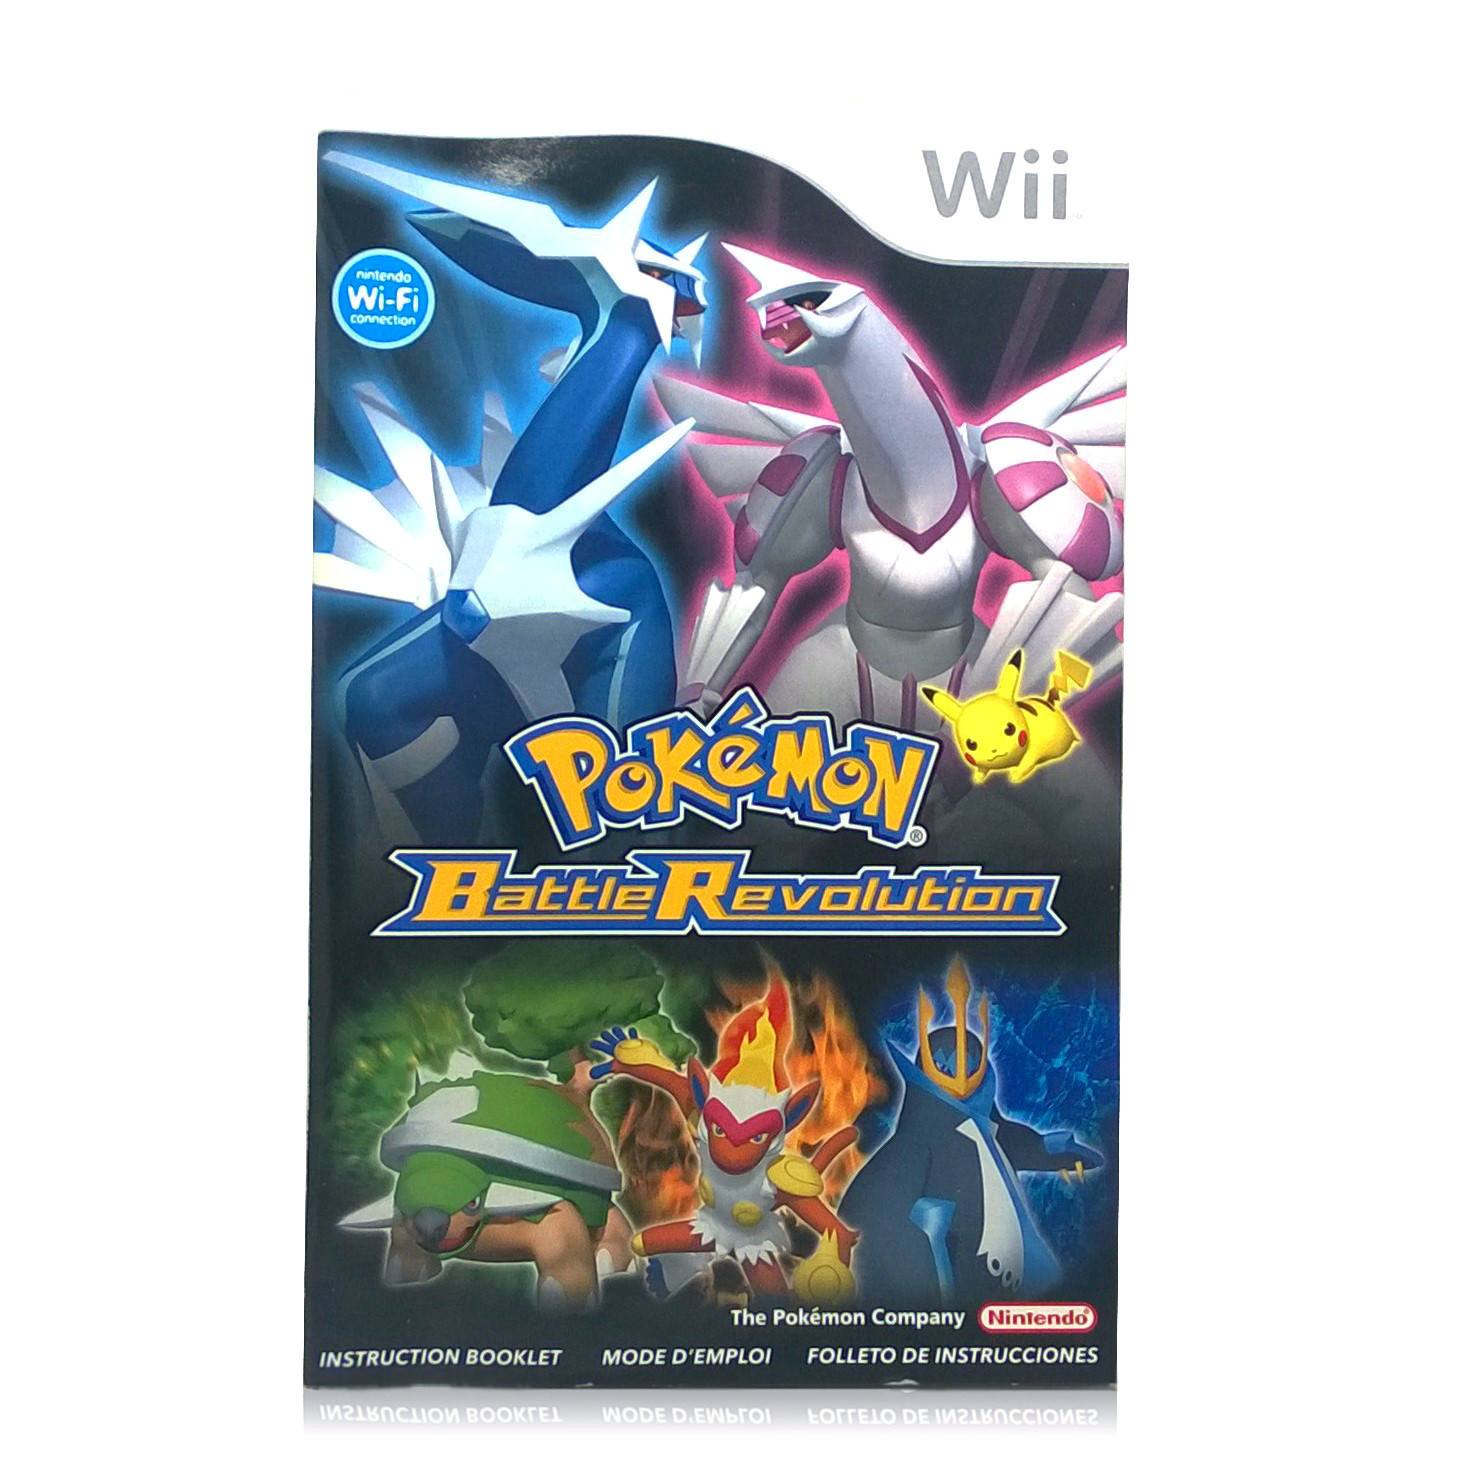 Pokémon Battle Revolution Nintendo Wii Game - Manual